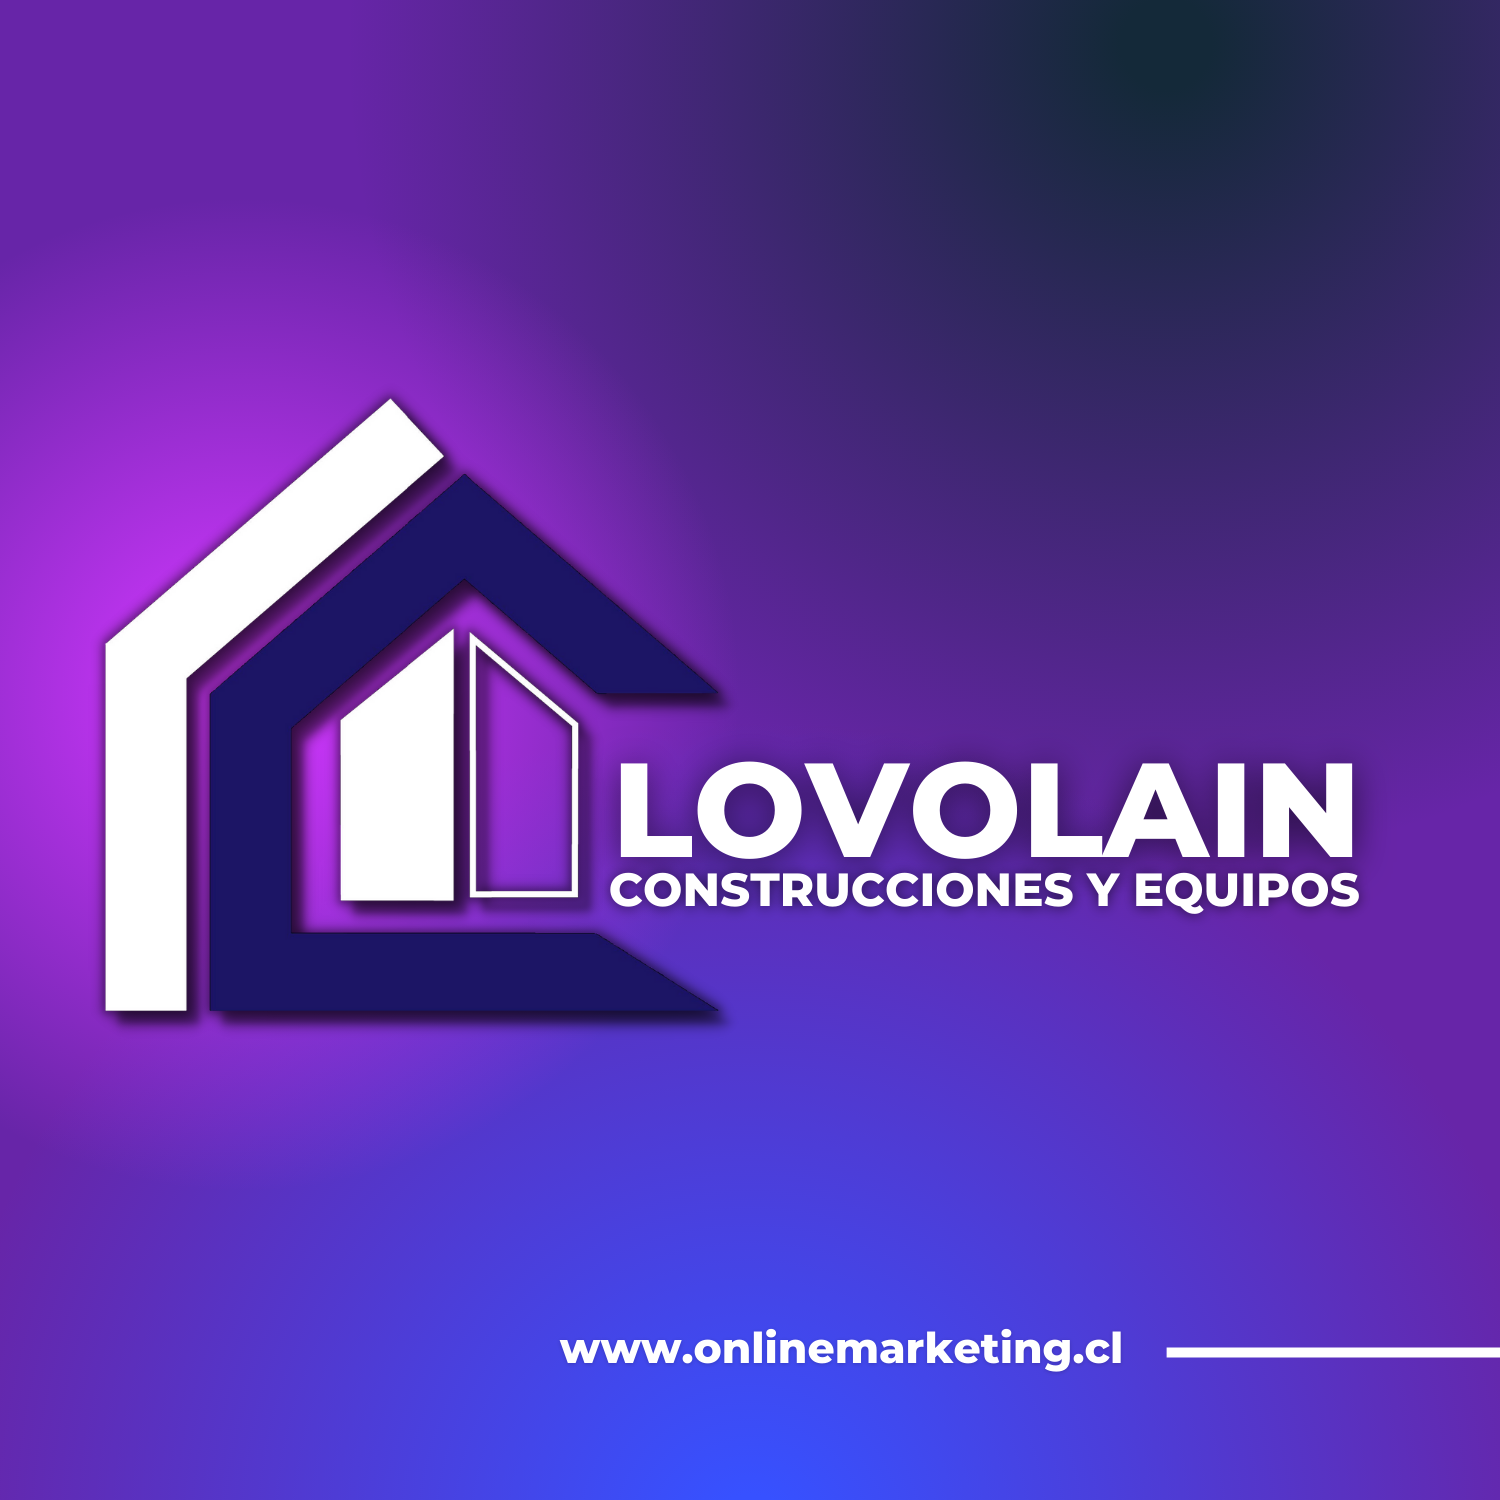 ~ ay, LOVOLA Y EQUIPOS

www.onlinemarketing.cl